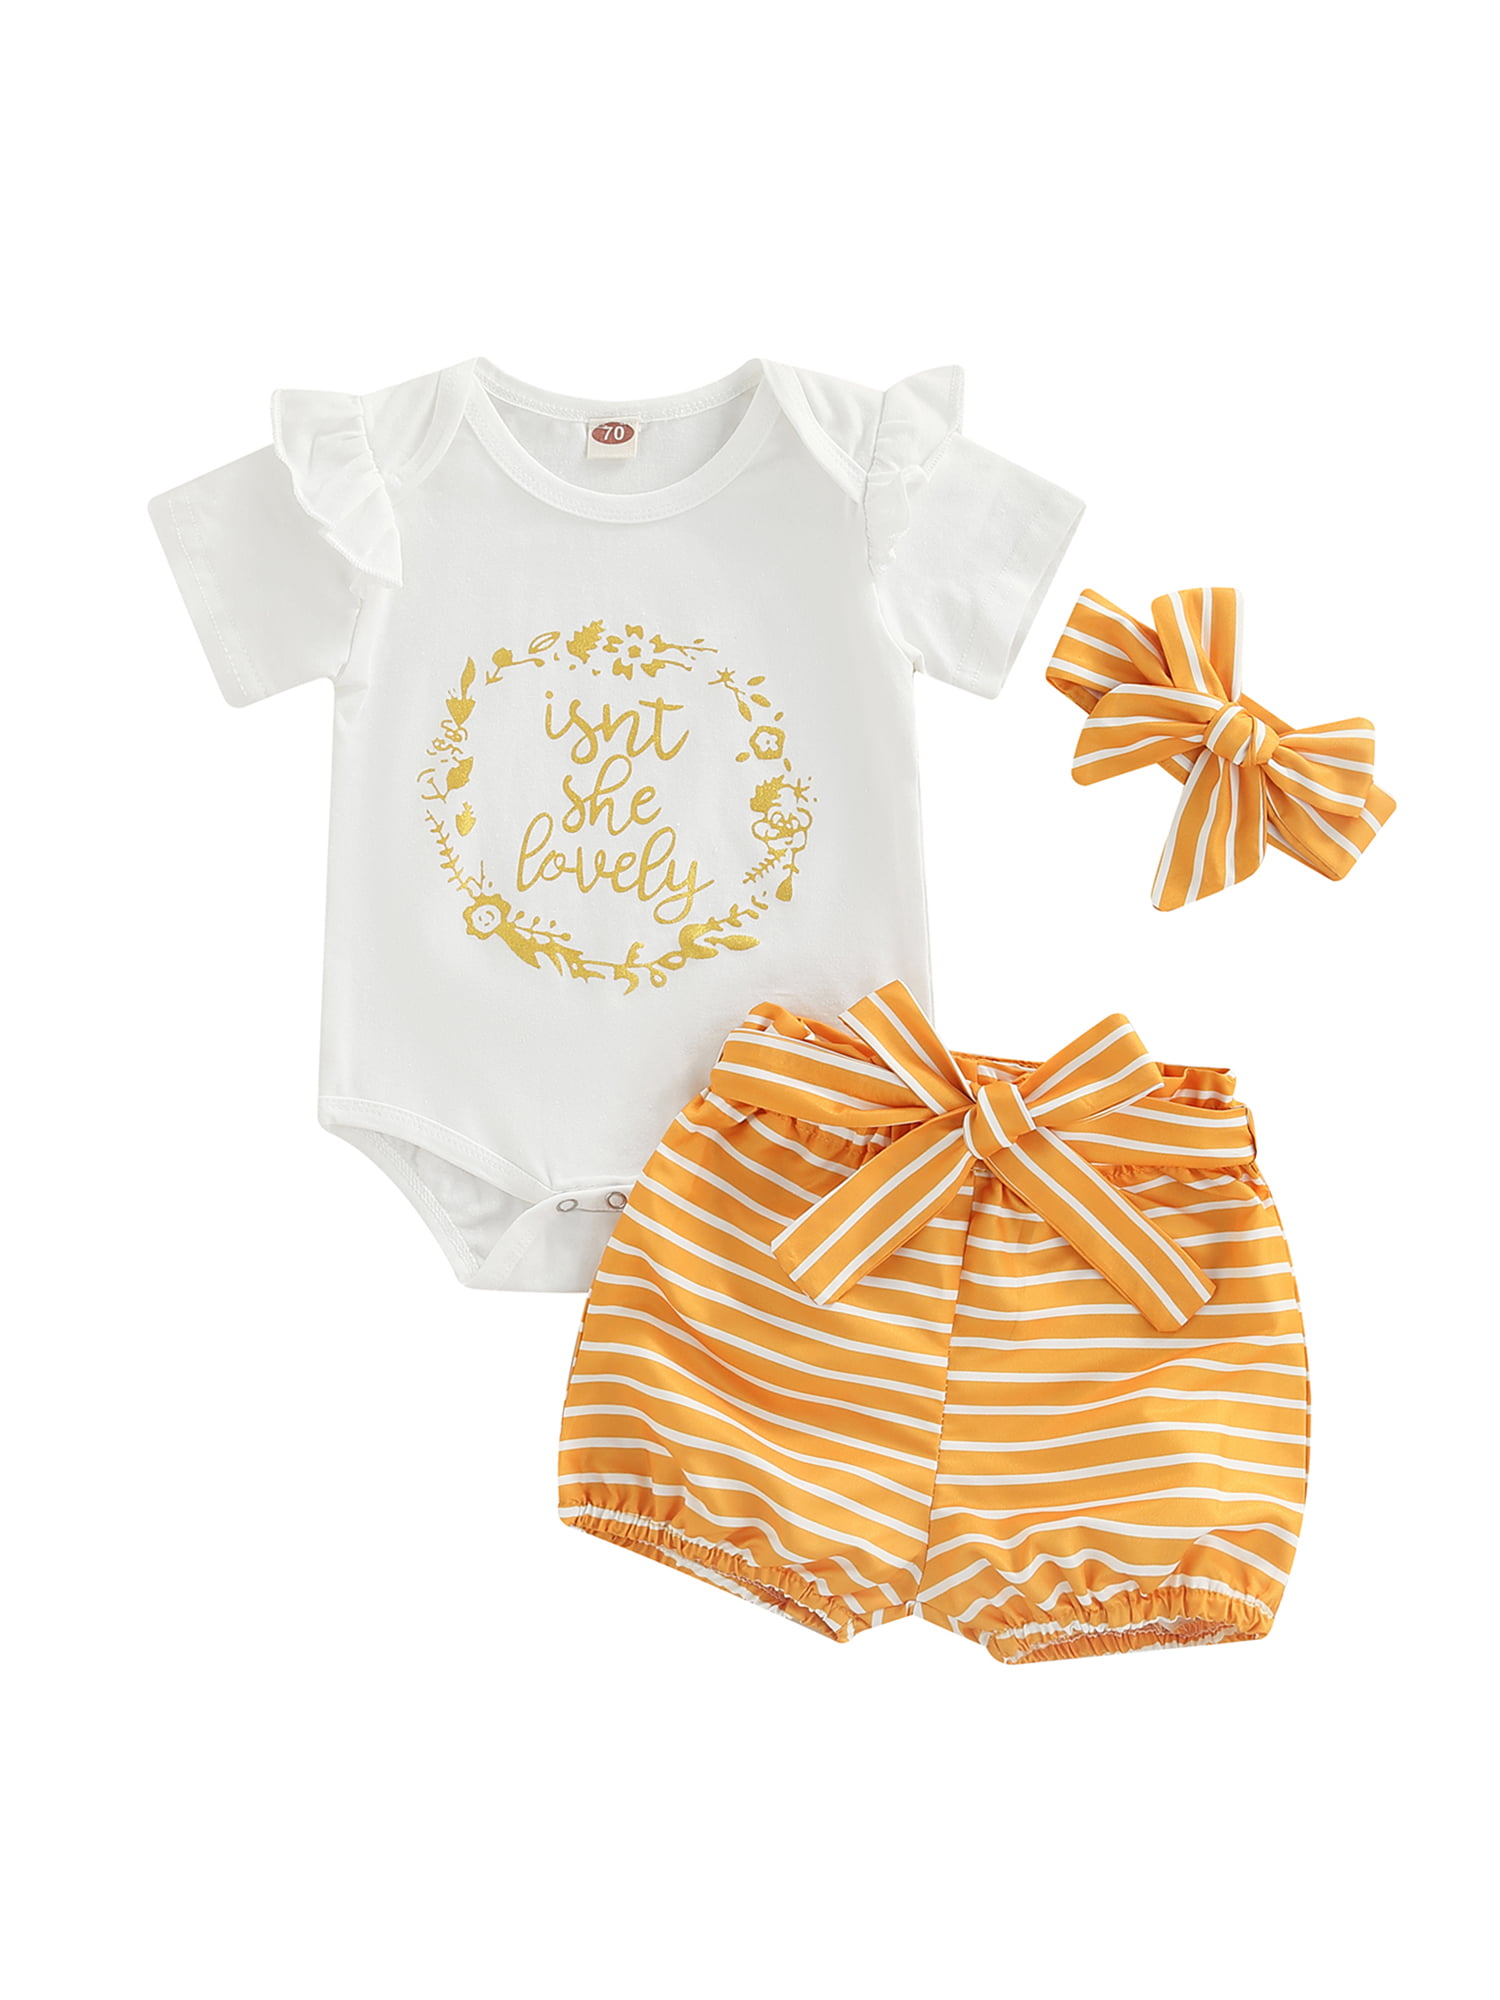 US Newborn Baby Girl 3Pcs Outfits Romper Tops Shorts Headband Set Infant Clothes 